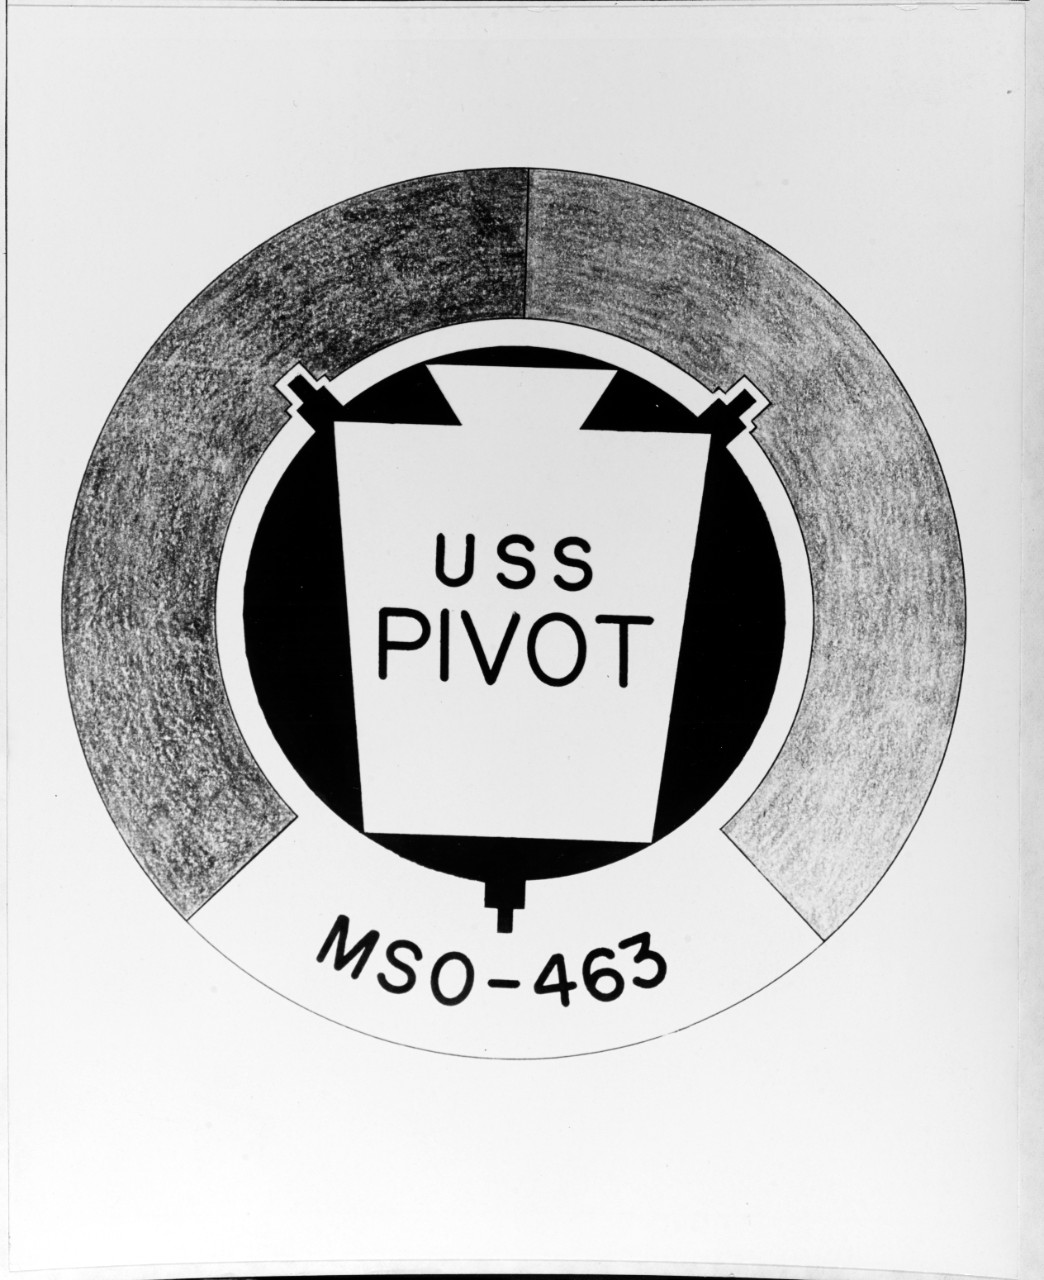 Insignia: USS PIVOT (MSO-463)